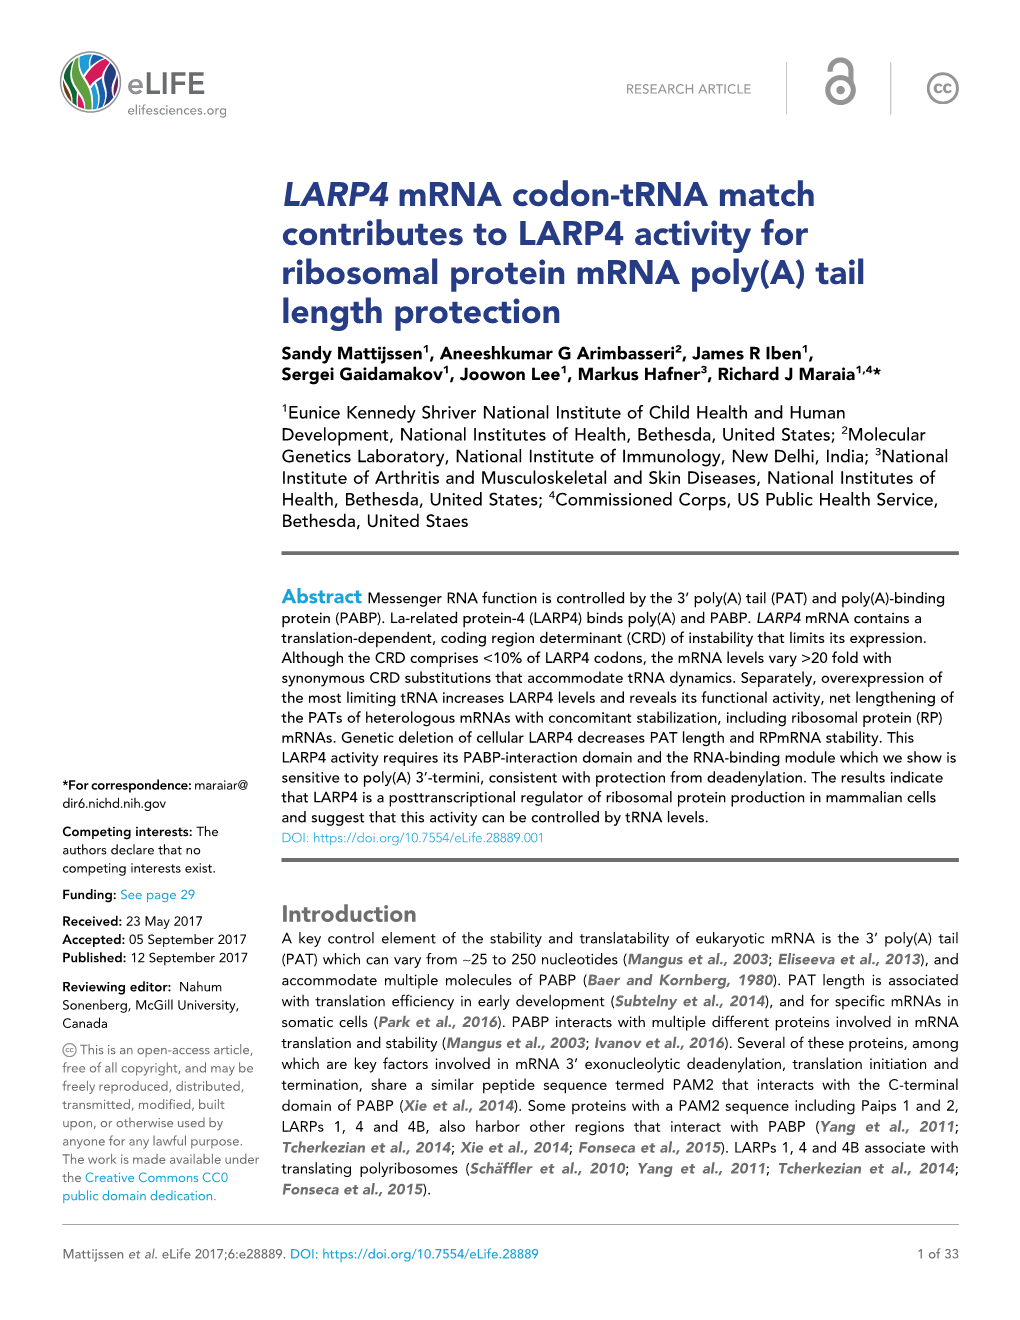 LARP4 Mrna Codon-Trna Match Contributes to LARP4 Activity